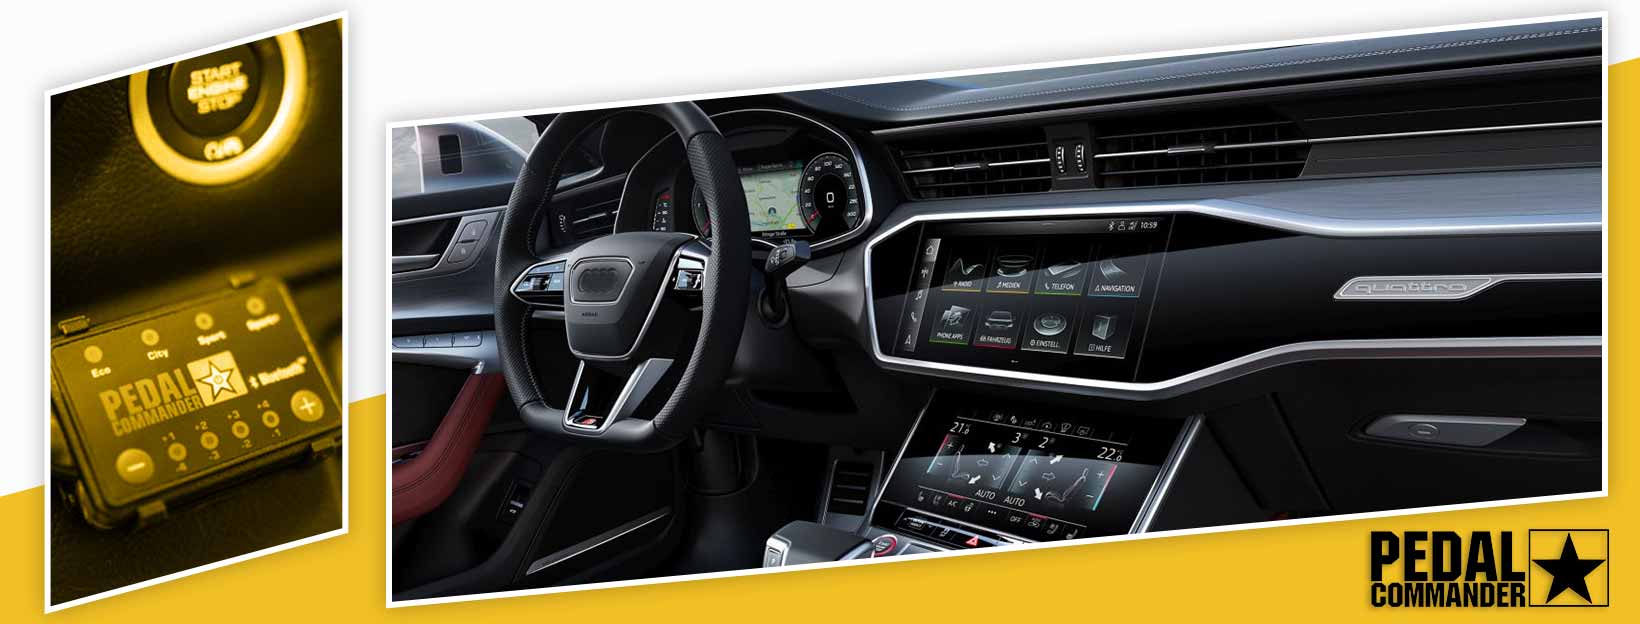 Pedal Commander for Audi S7 - interior